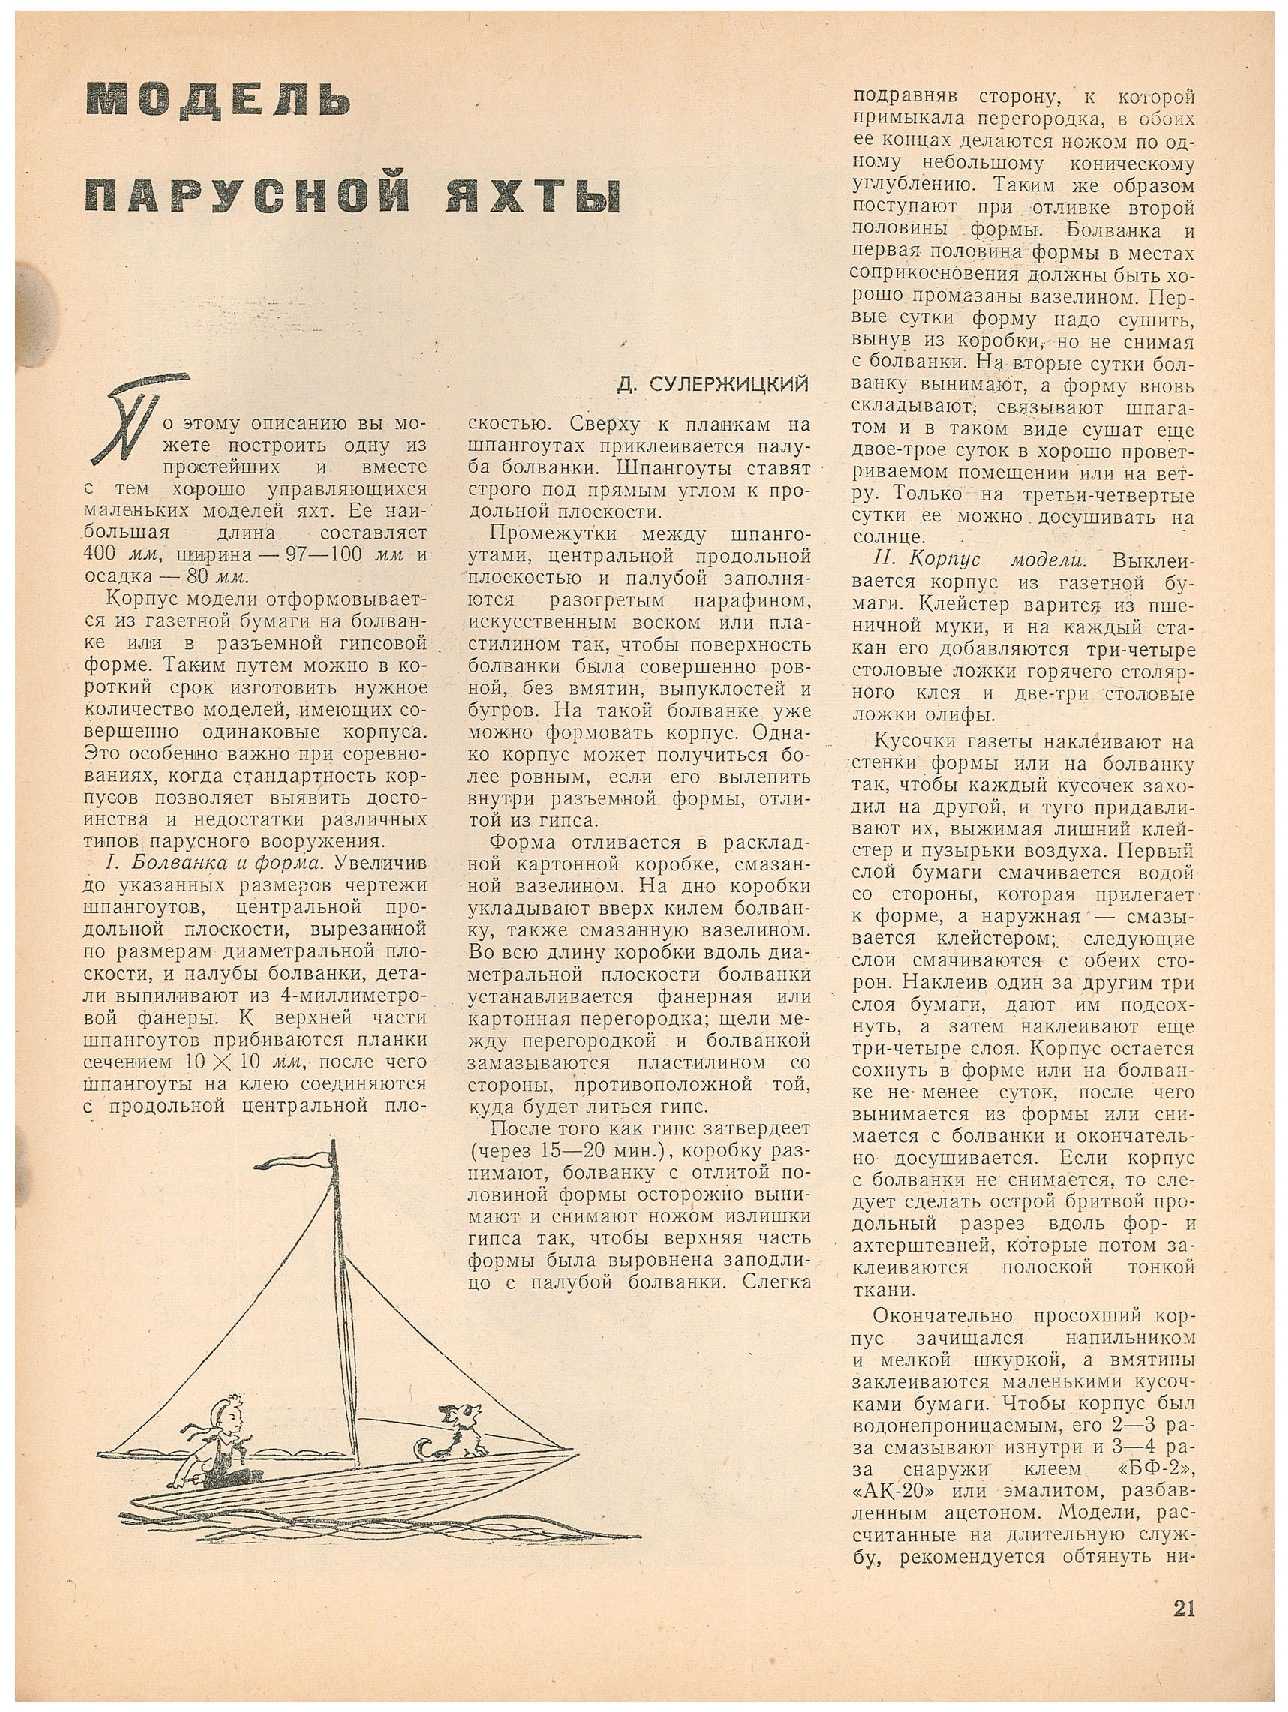 ЮМК 2, 1962, 21 c.